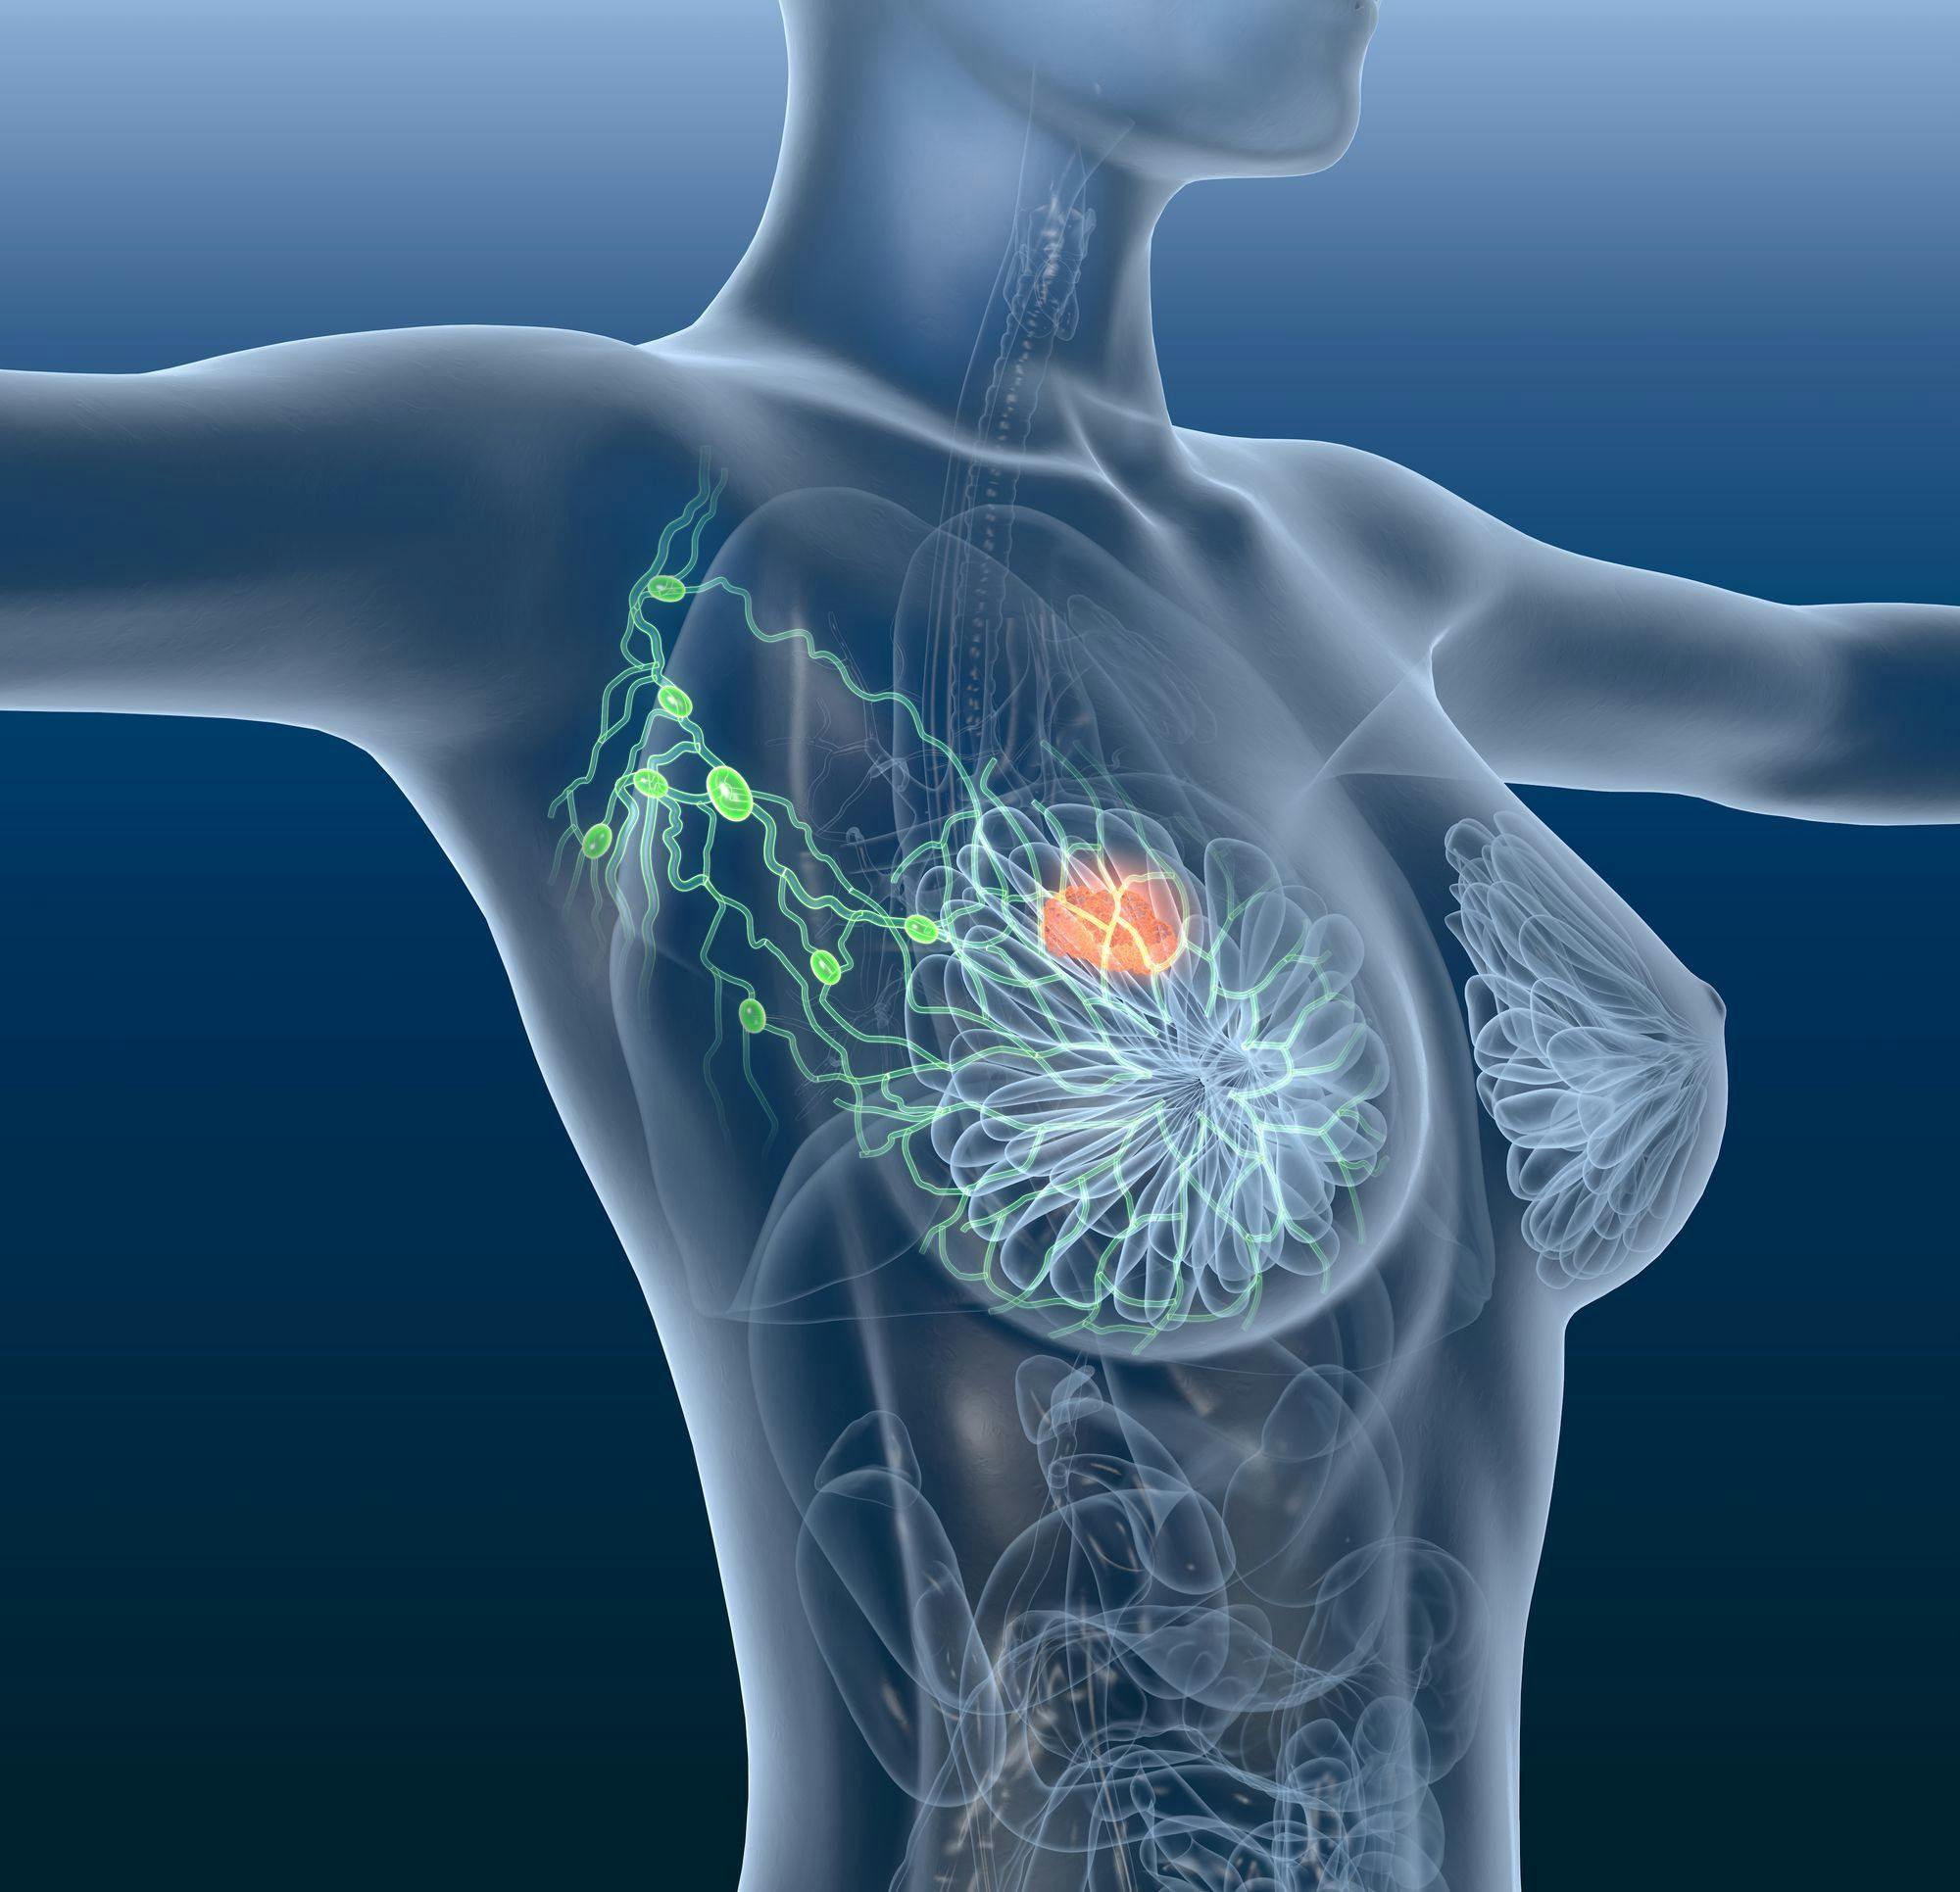 Breast cancer | Image credit: Axel Kock – stock.adobe.com